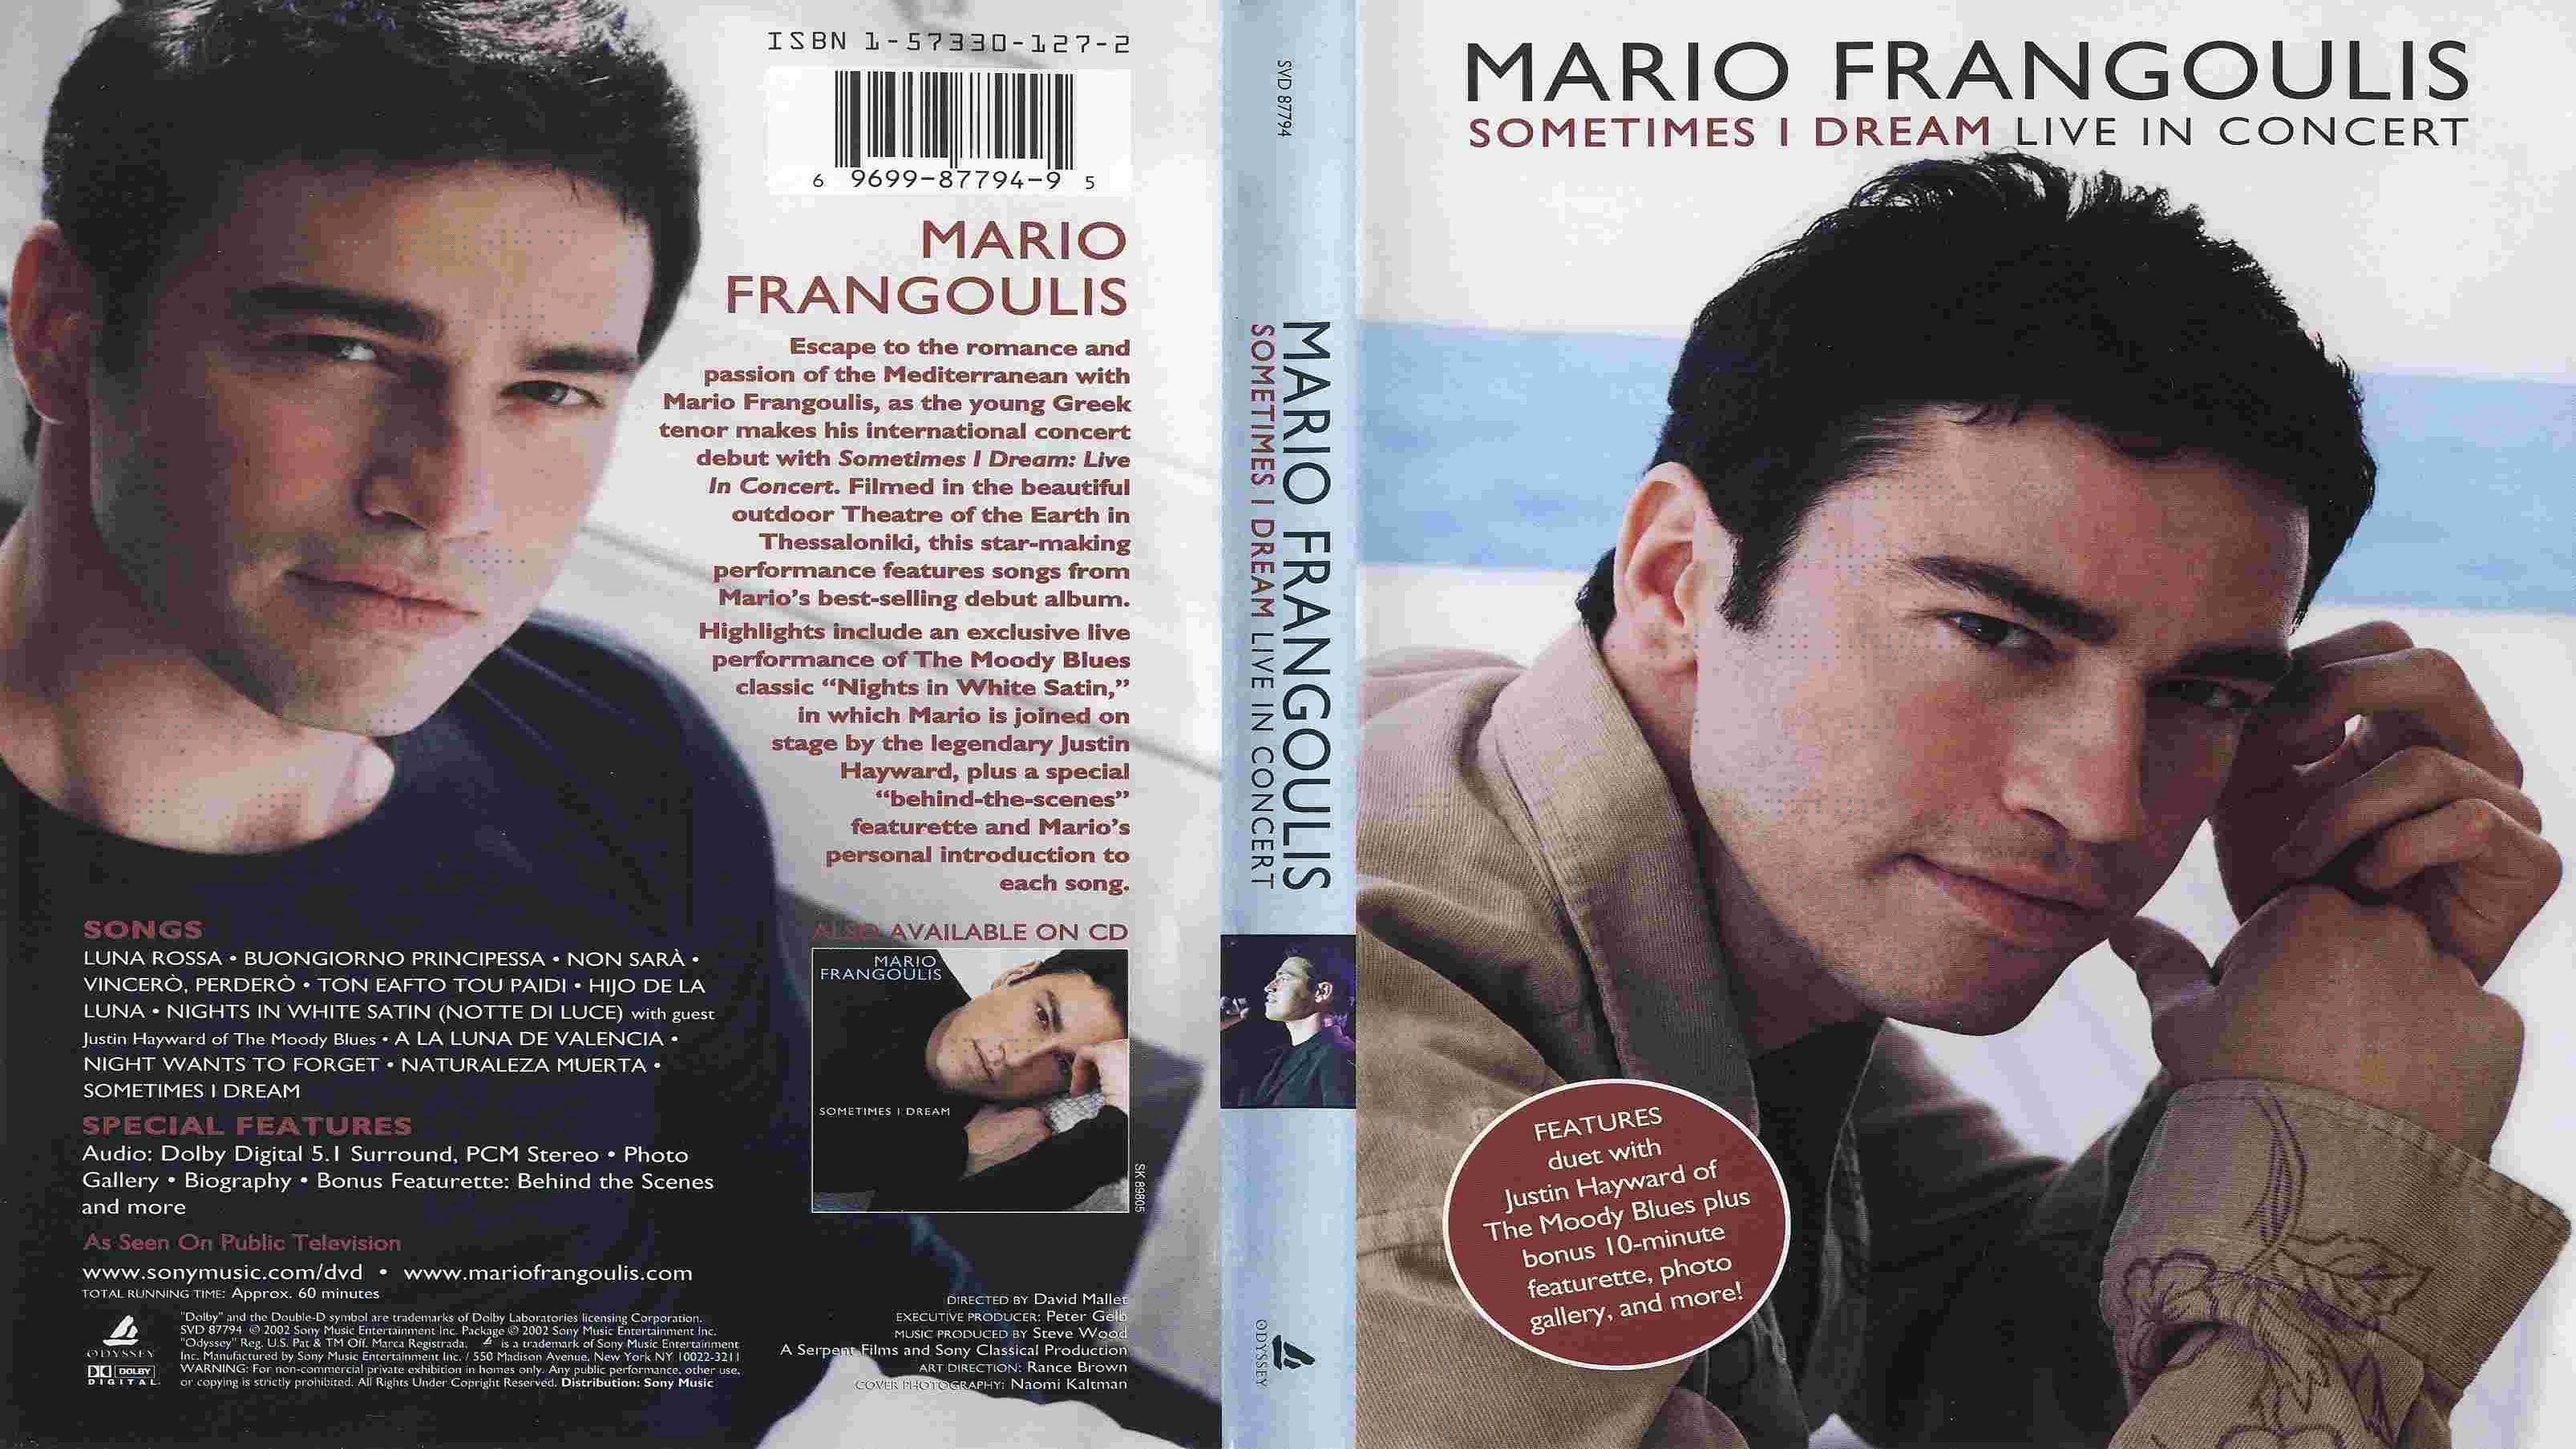 Mario Frangoulis - Sometimes I Dream (Live in Concert) backdrop